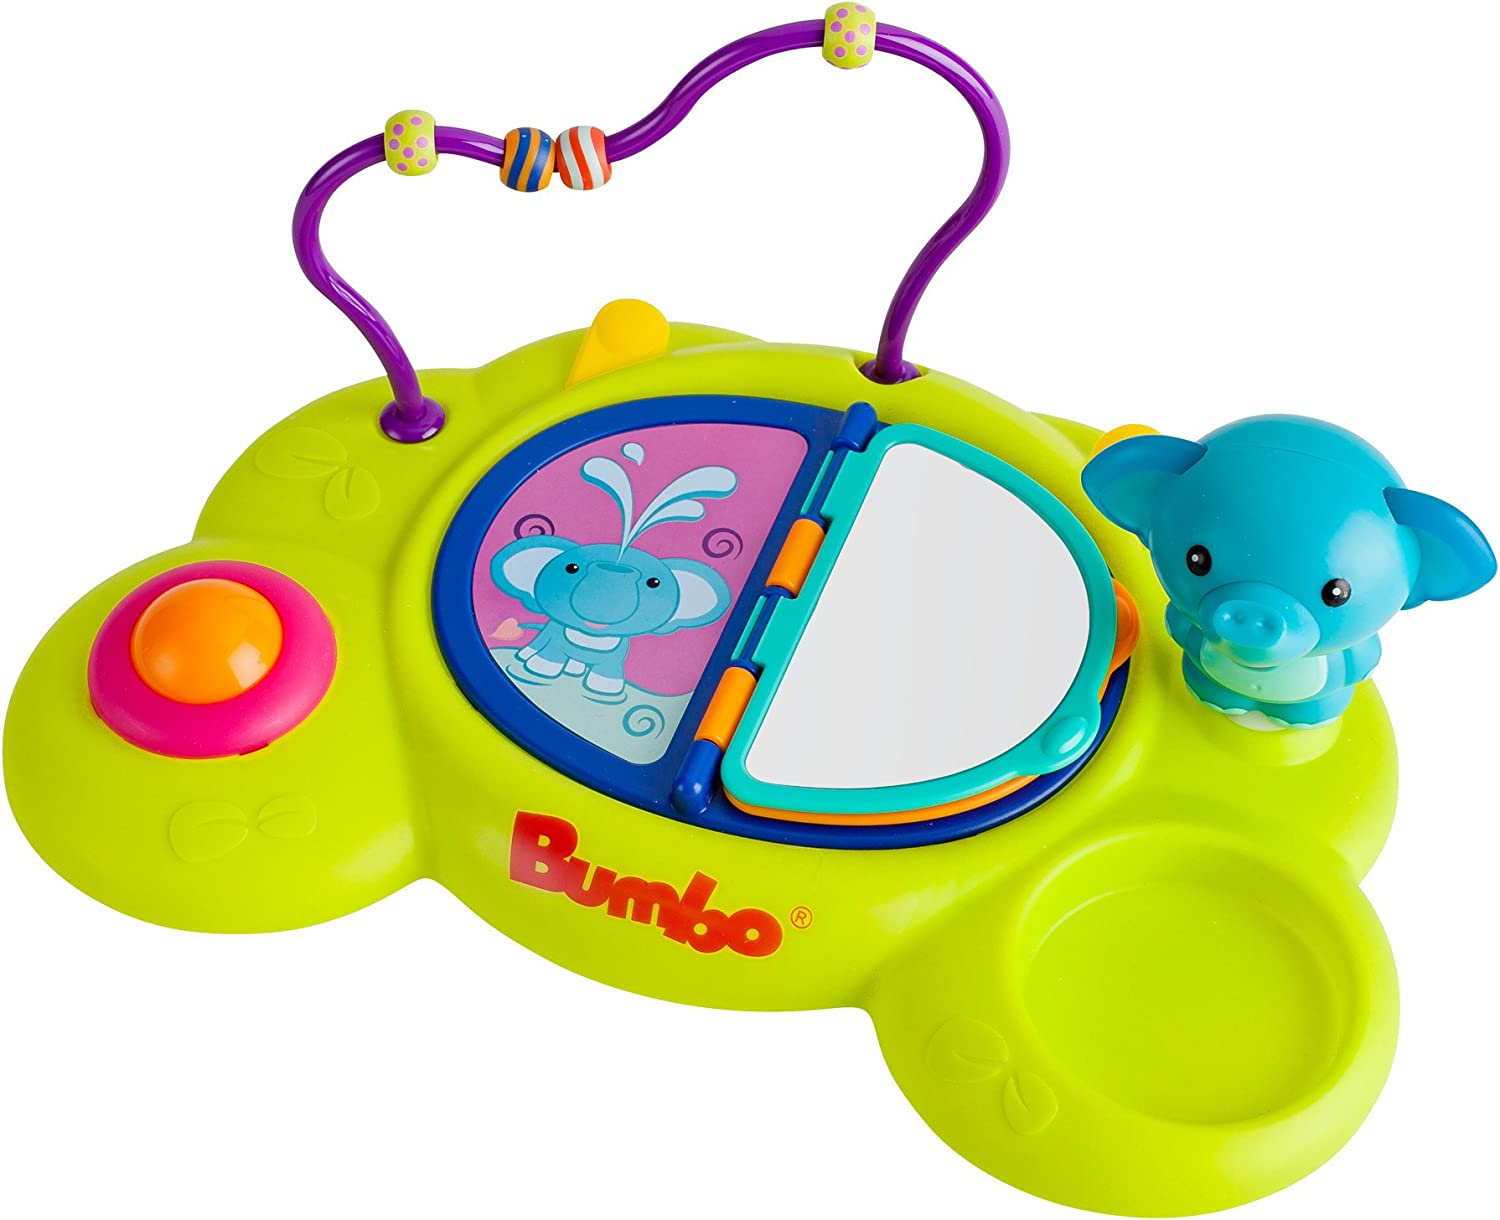 Bumbo Playtop Safari Activity Tray - ANB Baby -$20 - $50